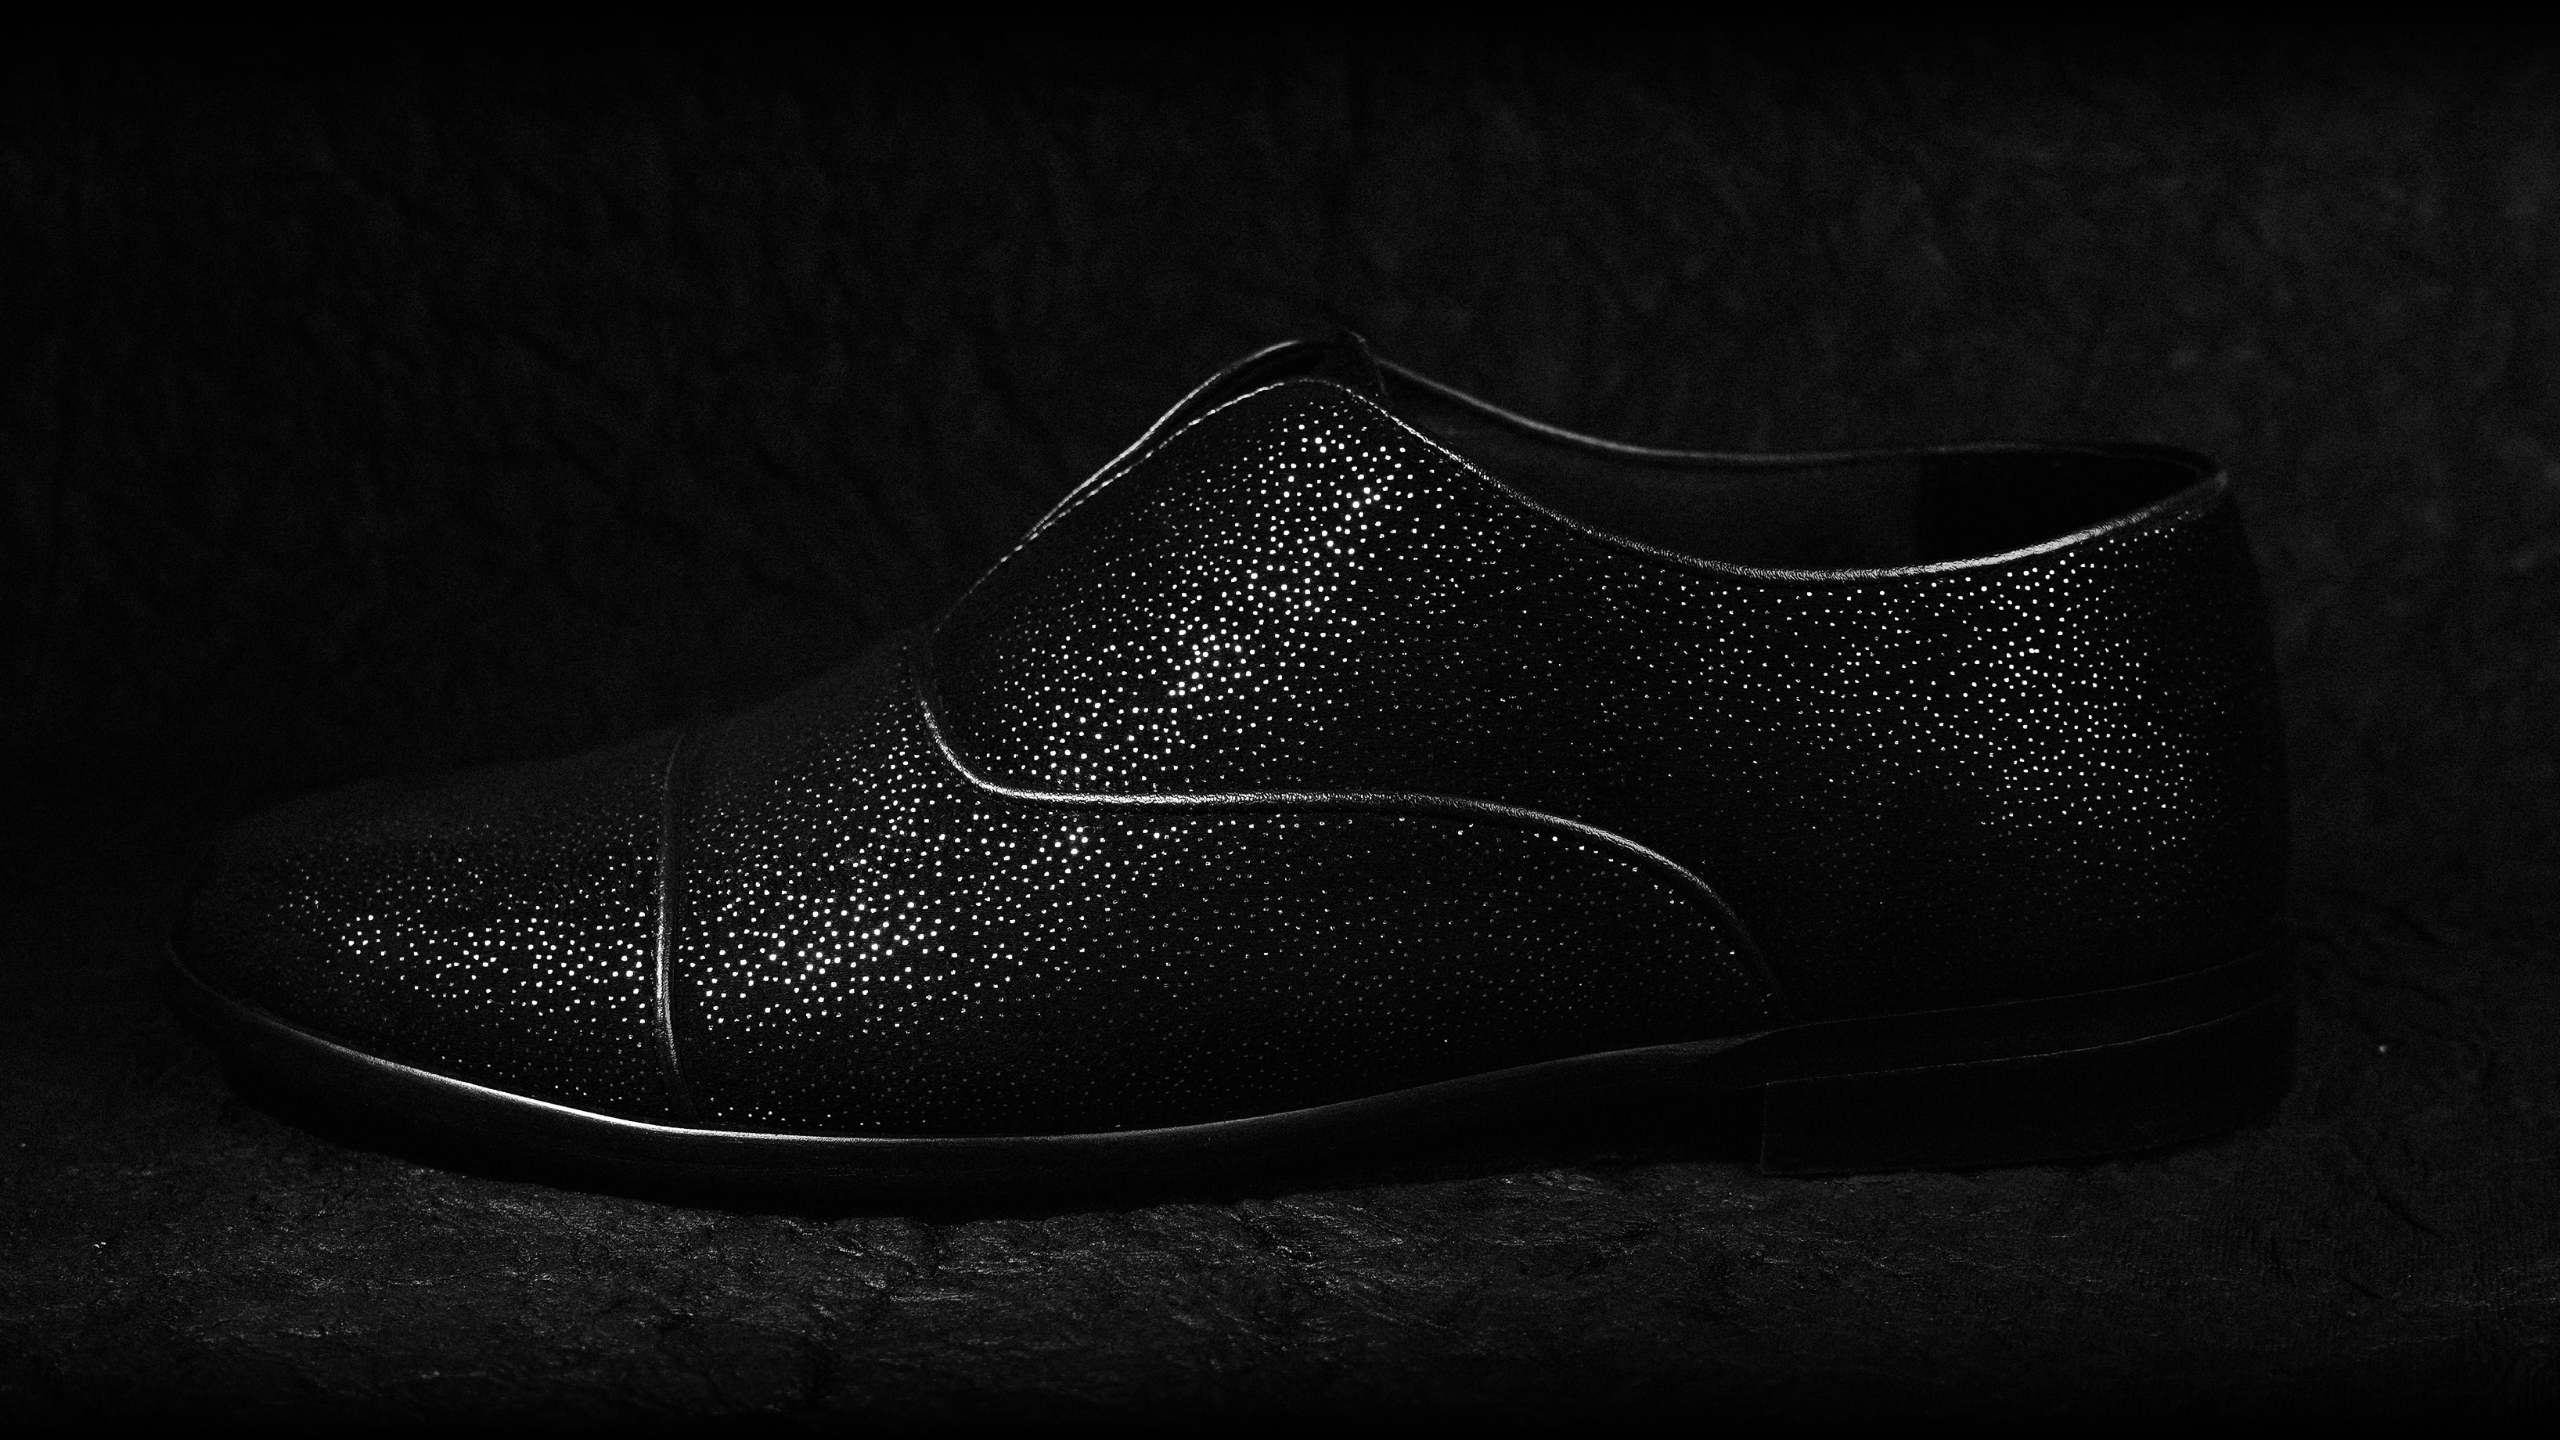 A black leather shoe on a black background.